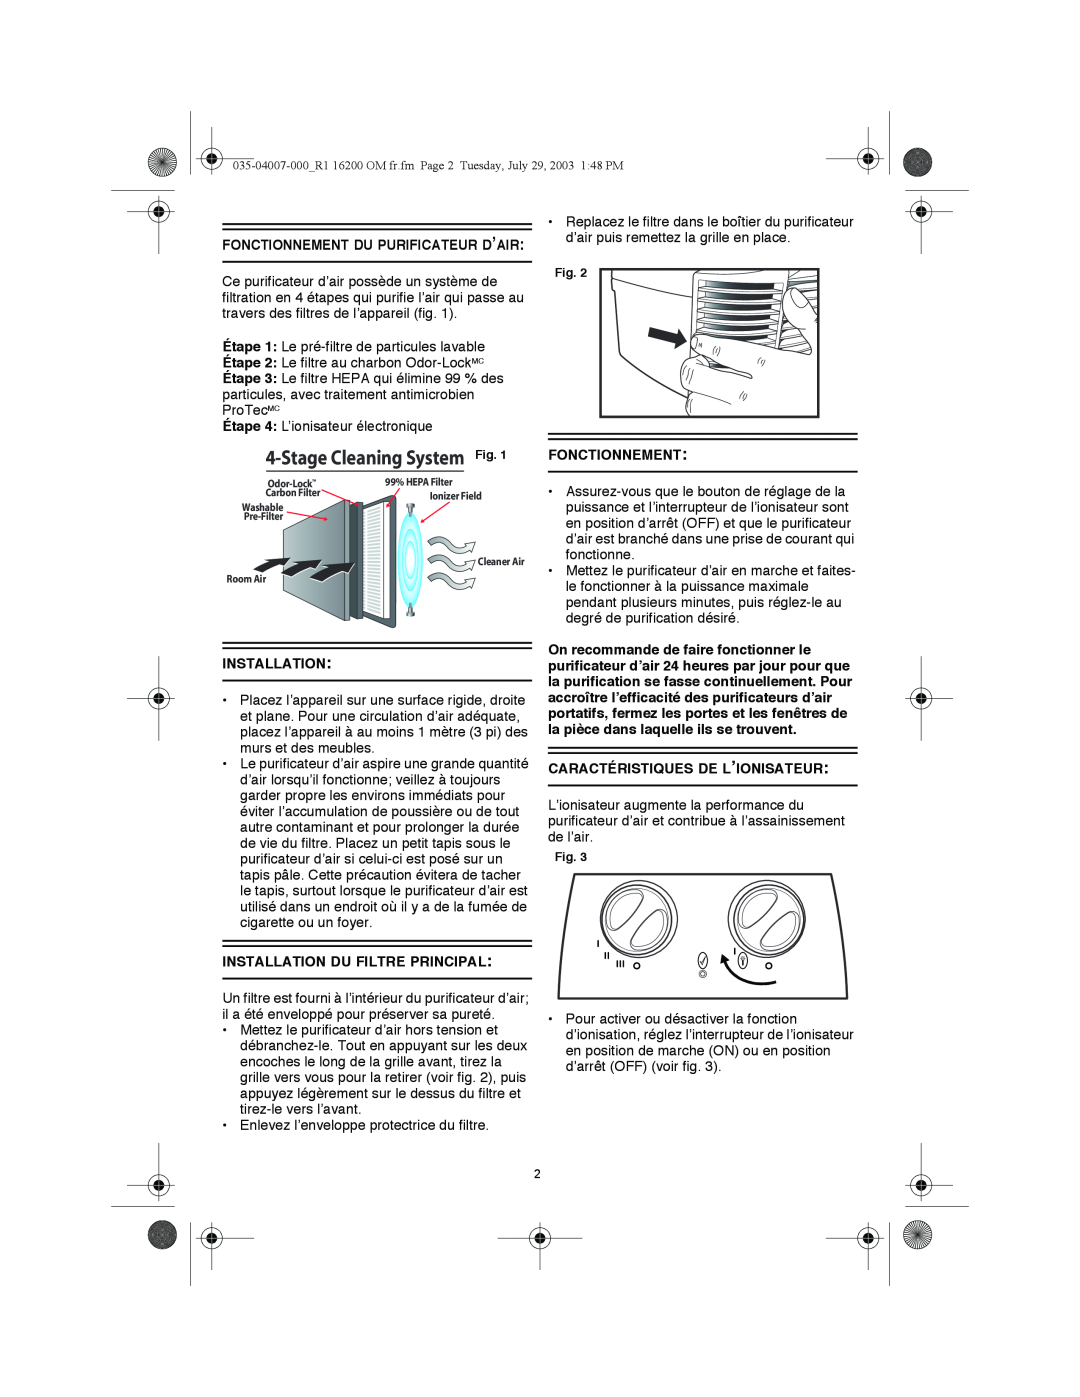 Honeywell 16200 Fonctionnement Du Purificateur D’Air, Installation Du Filtre Principal, StageCleaning System Fig 